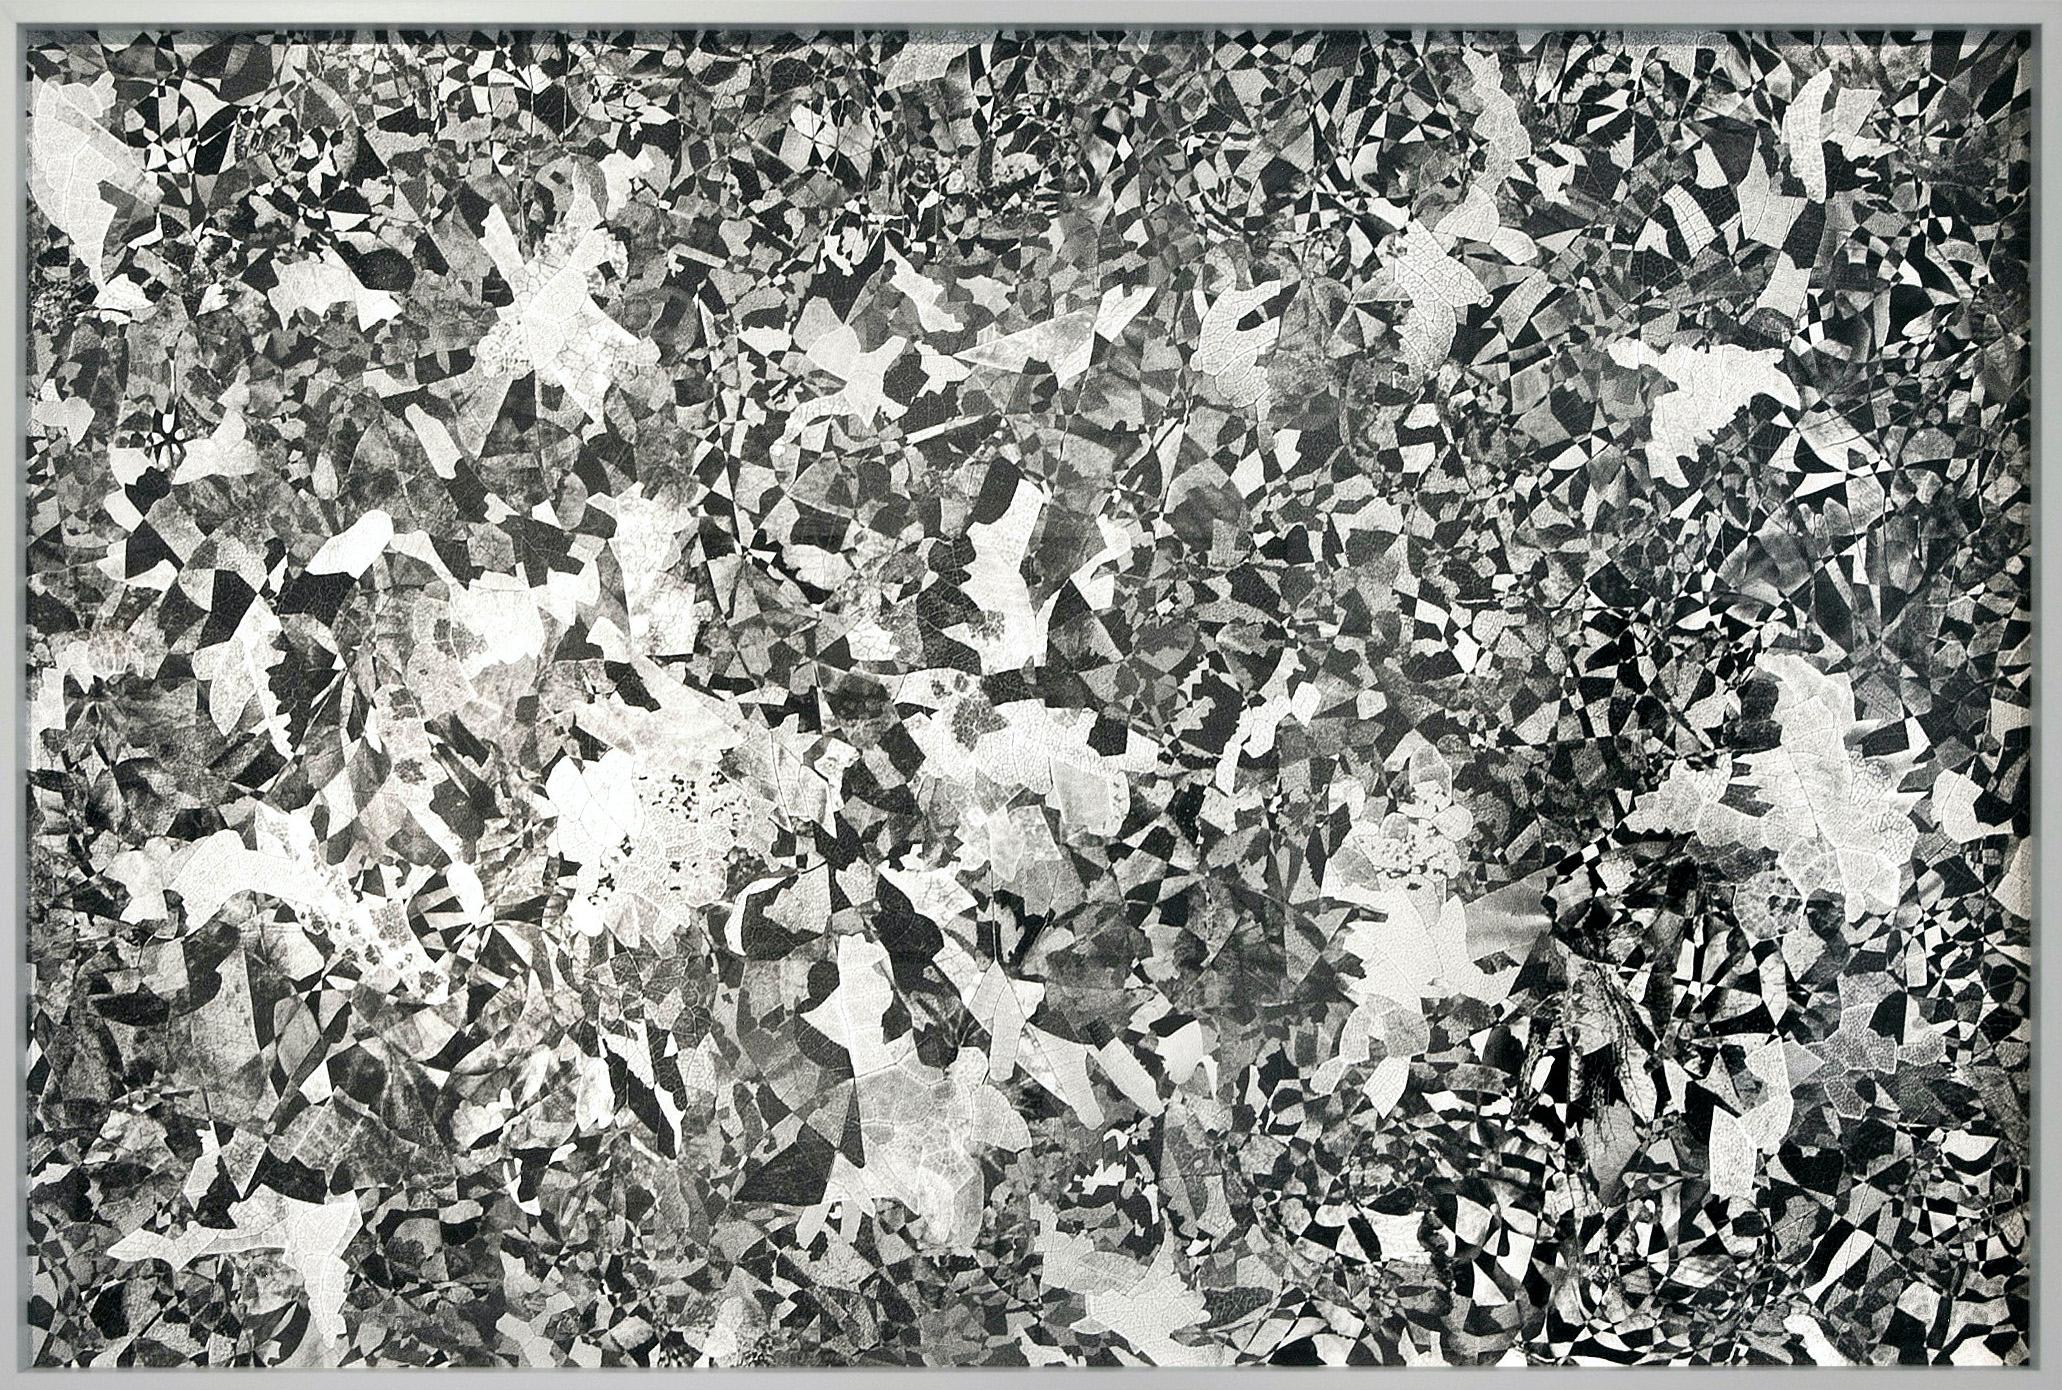 Hubert Blanz Landscape Photograph - Feldforschung 05 - Contemporary Abstract Diamond Texture Photograph